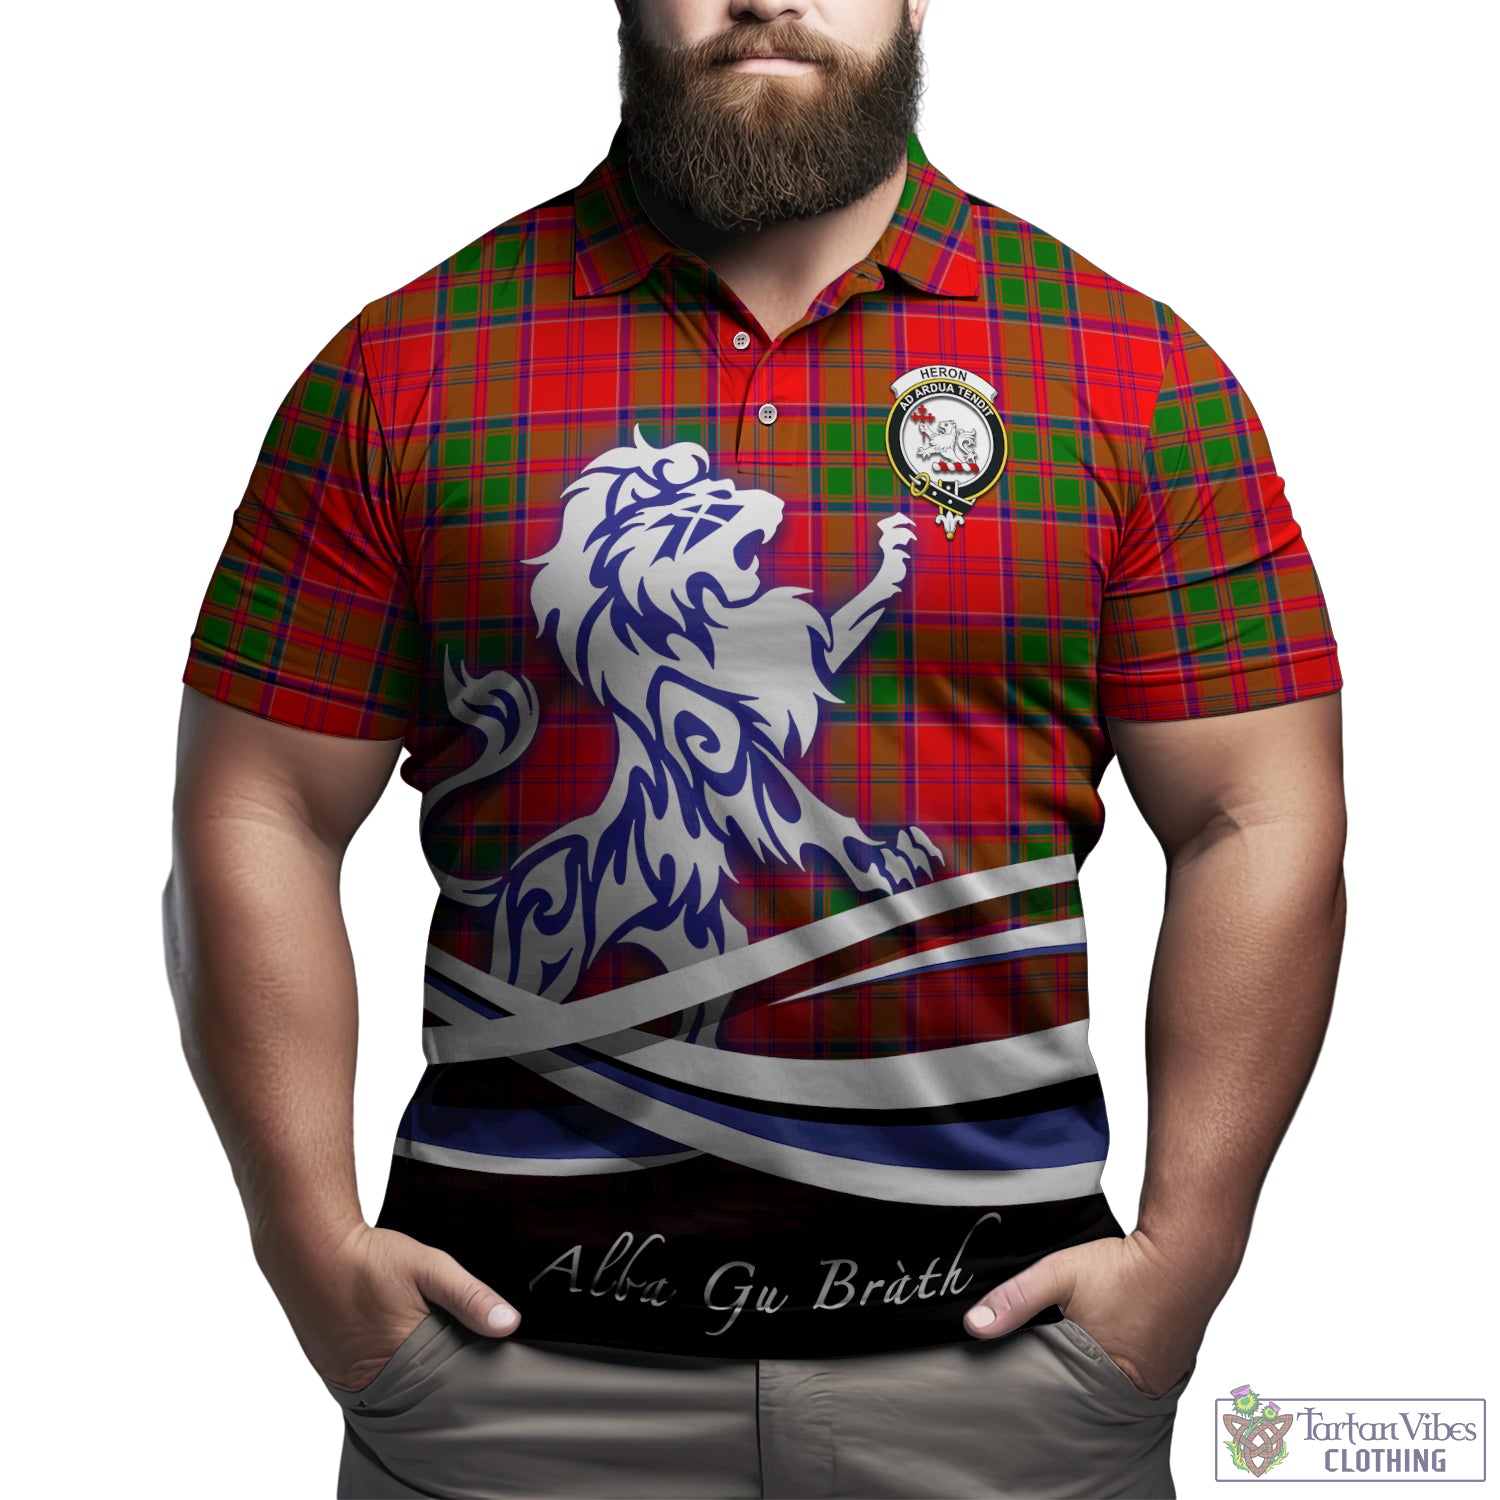 heron-tartan-polo-shirt-with-alba-gu-brath-regal-lion-emblem